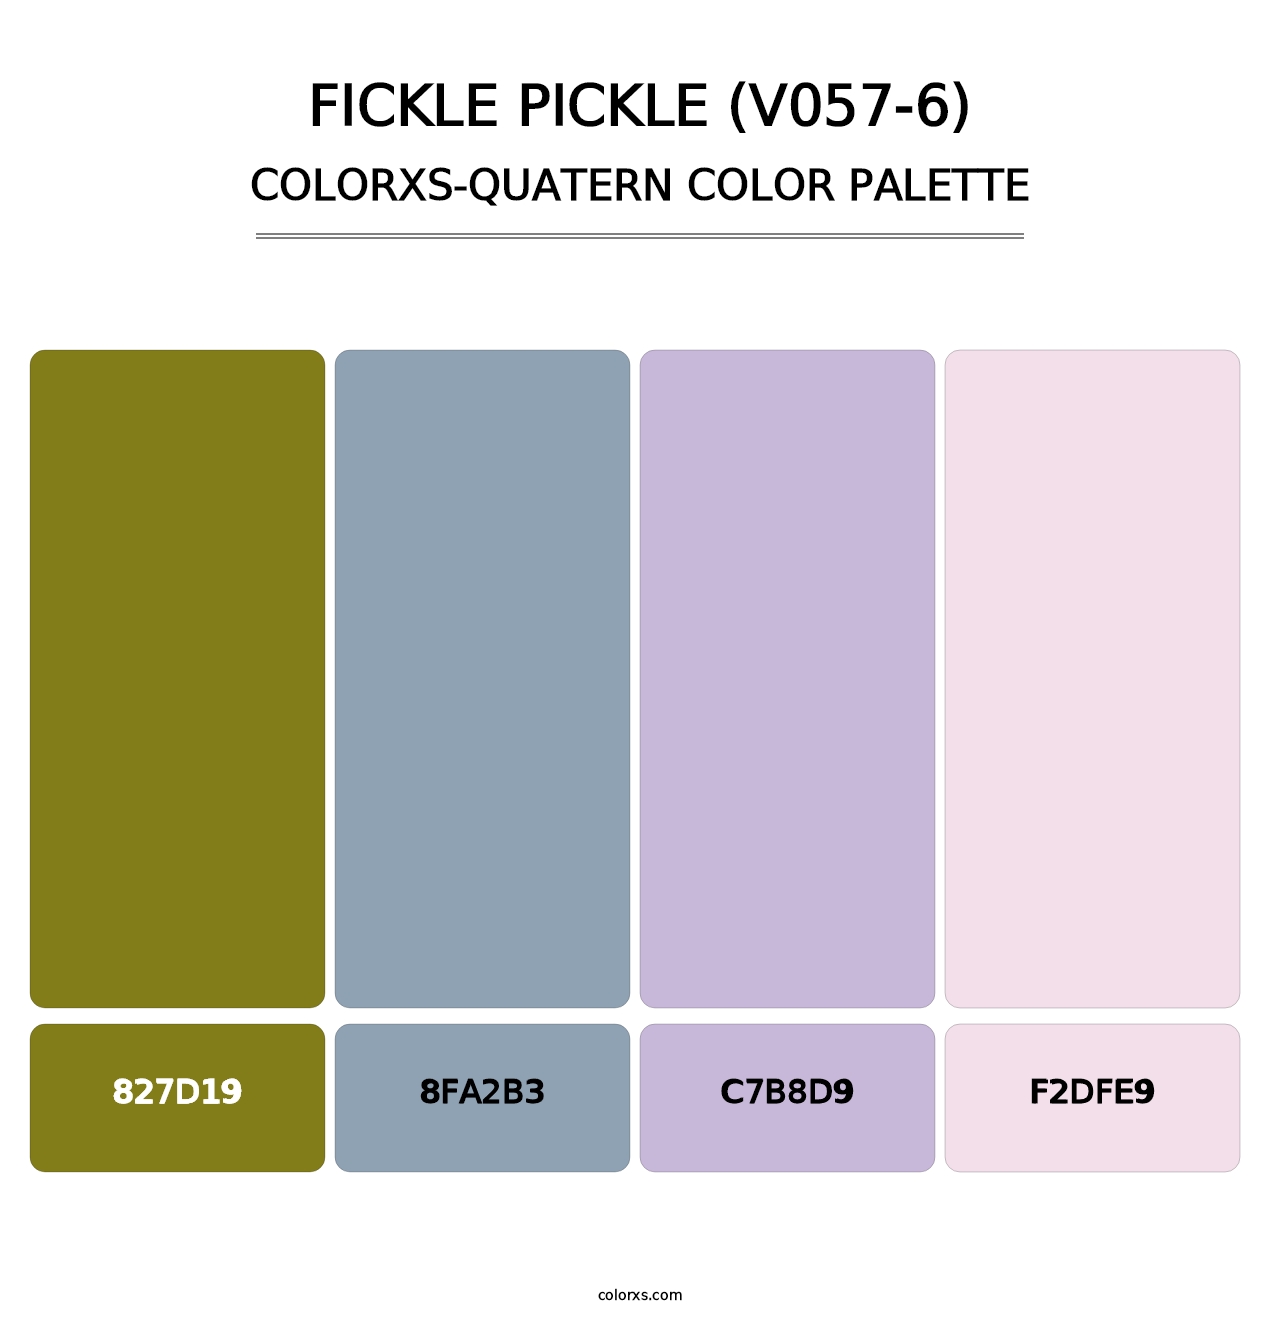 Fickle Pickle (V057-6) - Colorxs Quatern Palette